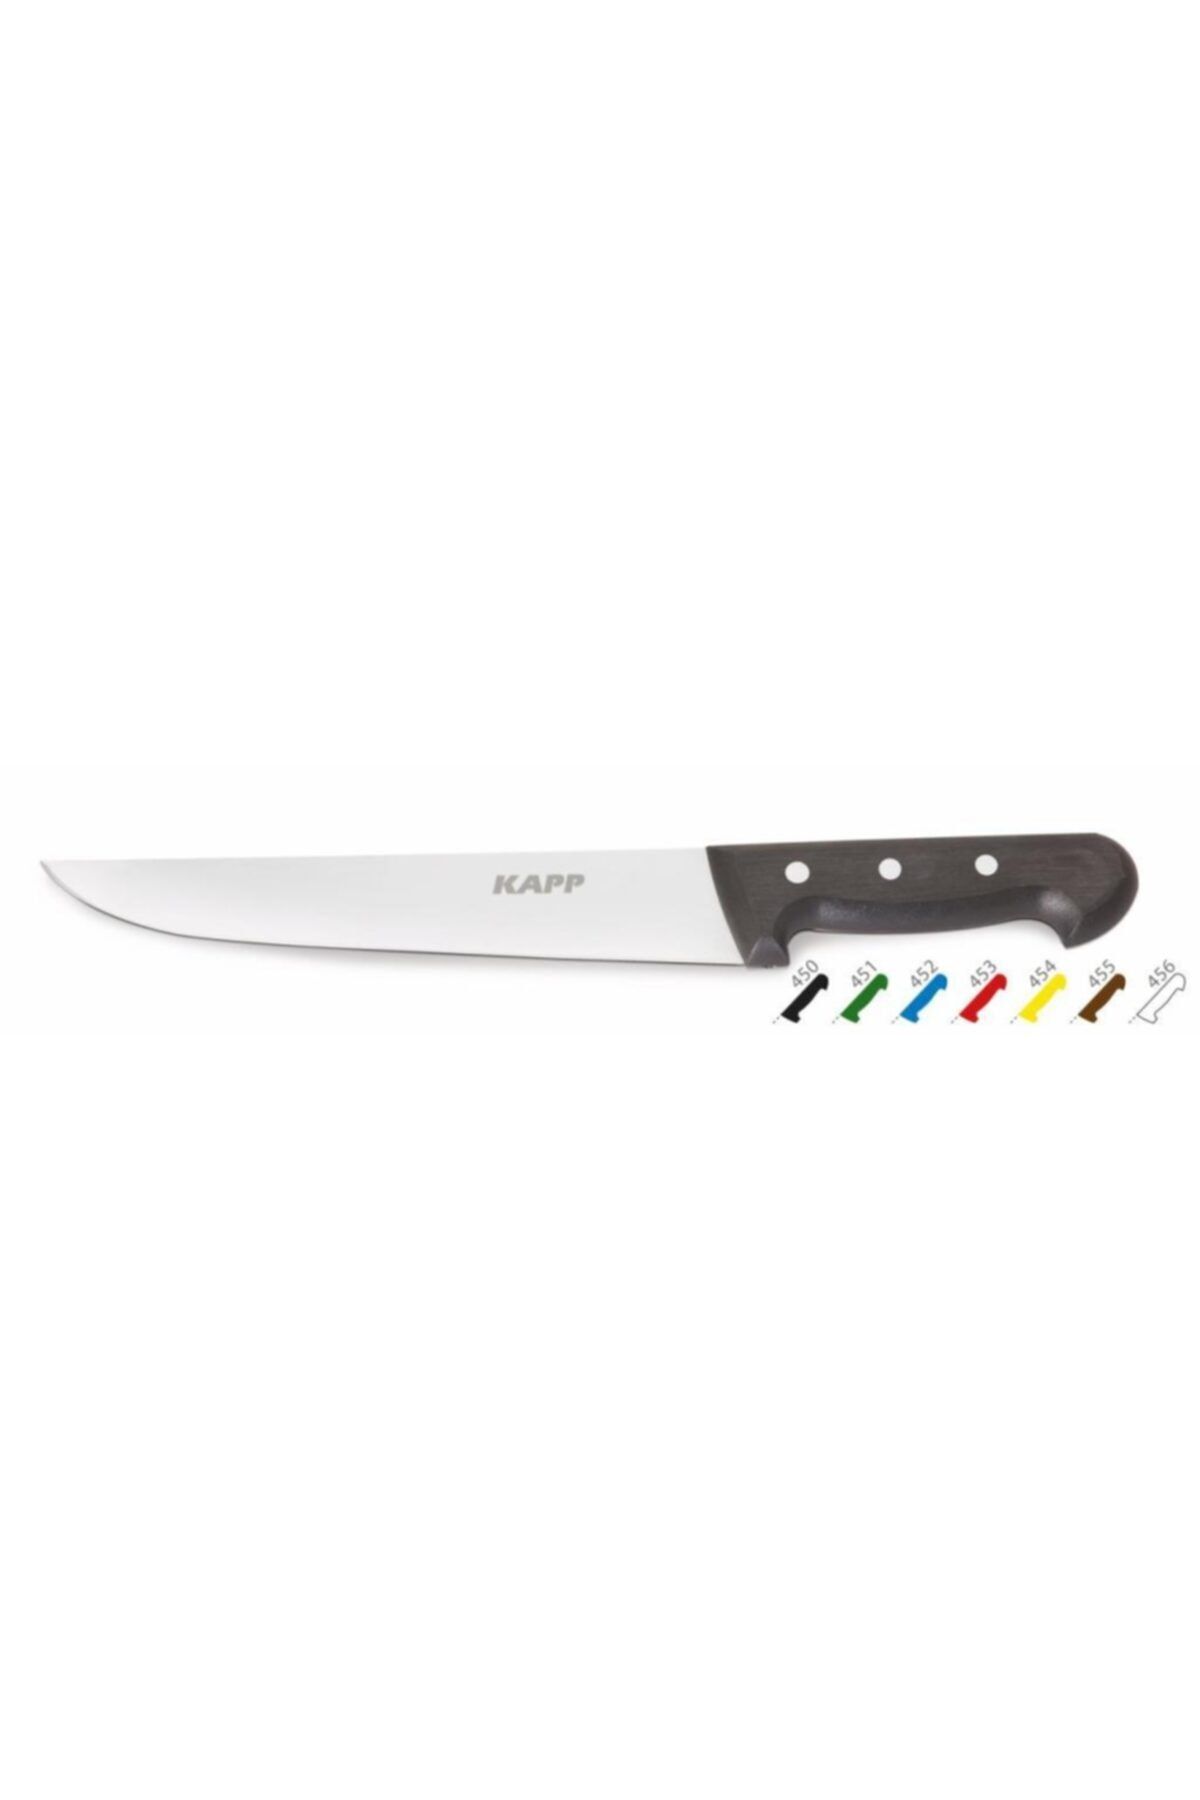 Kapp Mutfak Bıçağı - Siyah 14,5 Cm